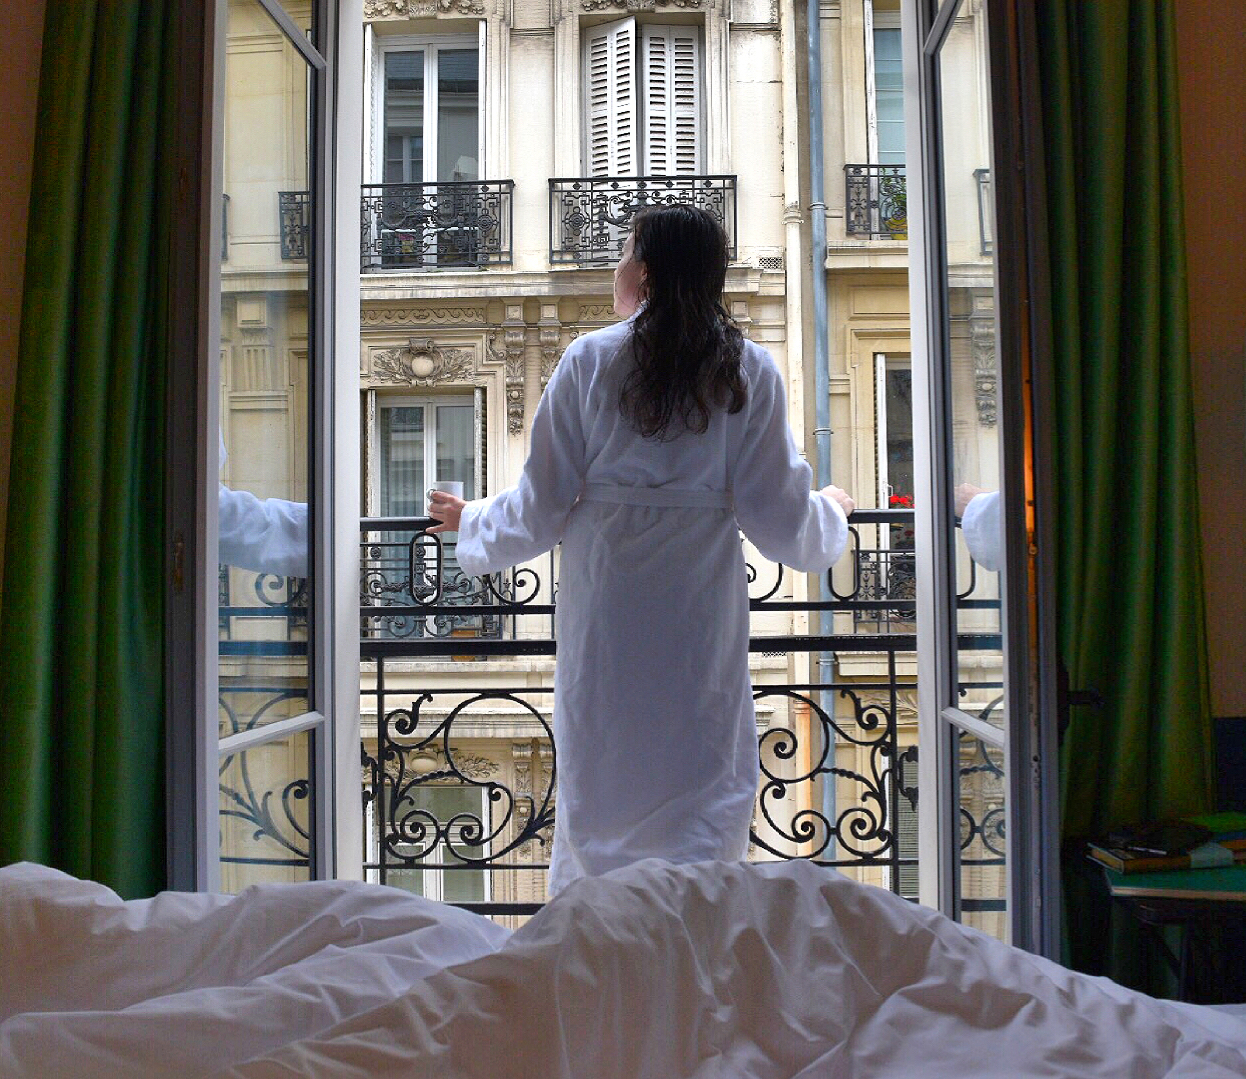 Hotel Adele et Jules in Paris, France | © Nikki Vargas